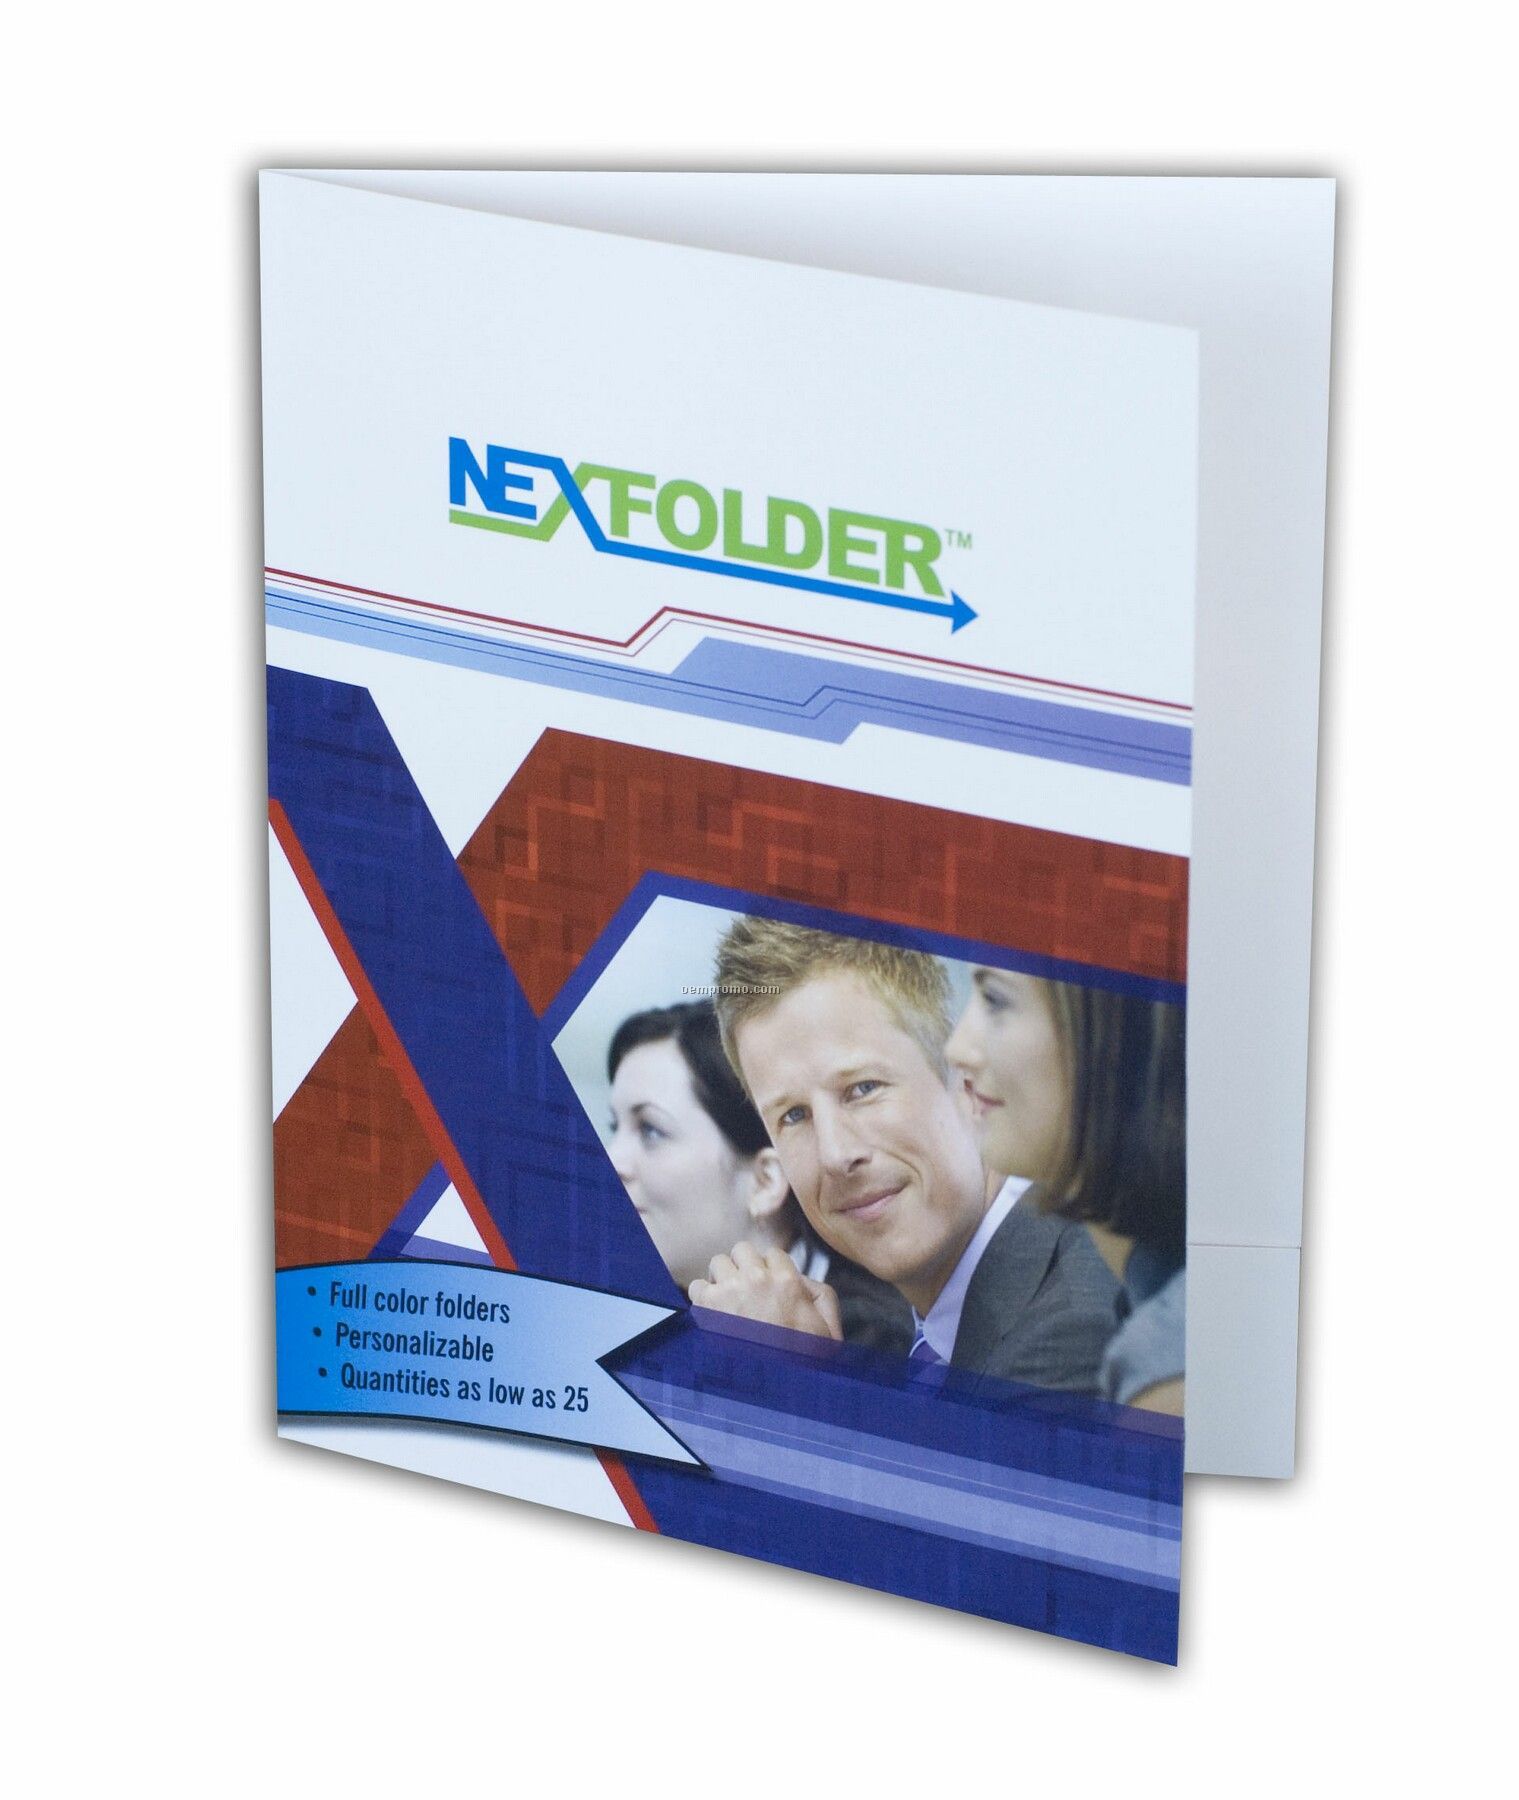 The Nexfolder-full Color, Low Quantity Folders